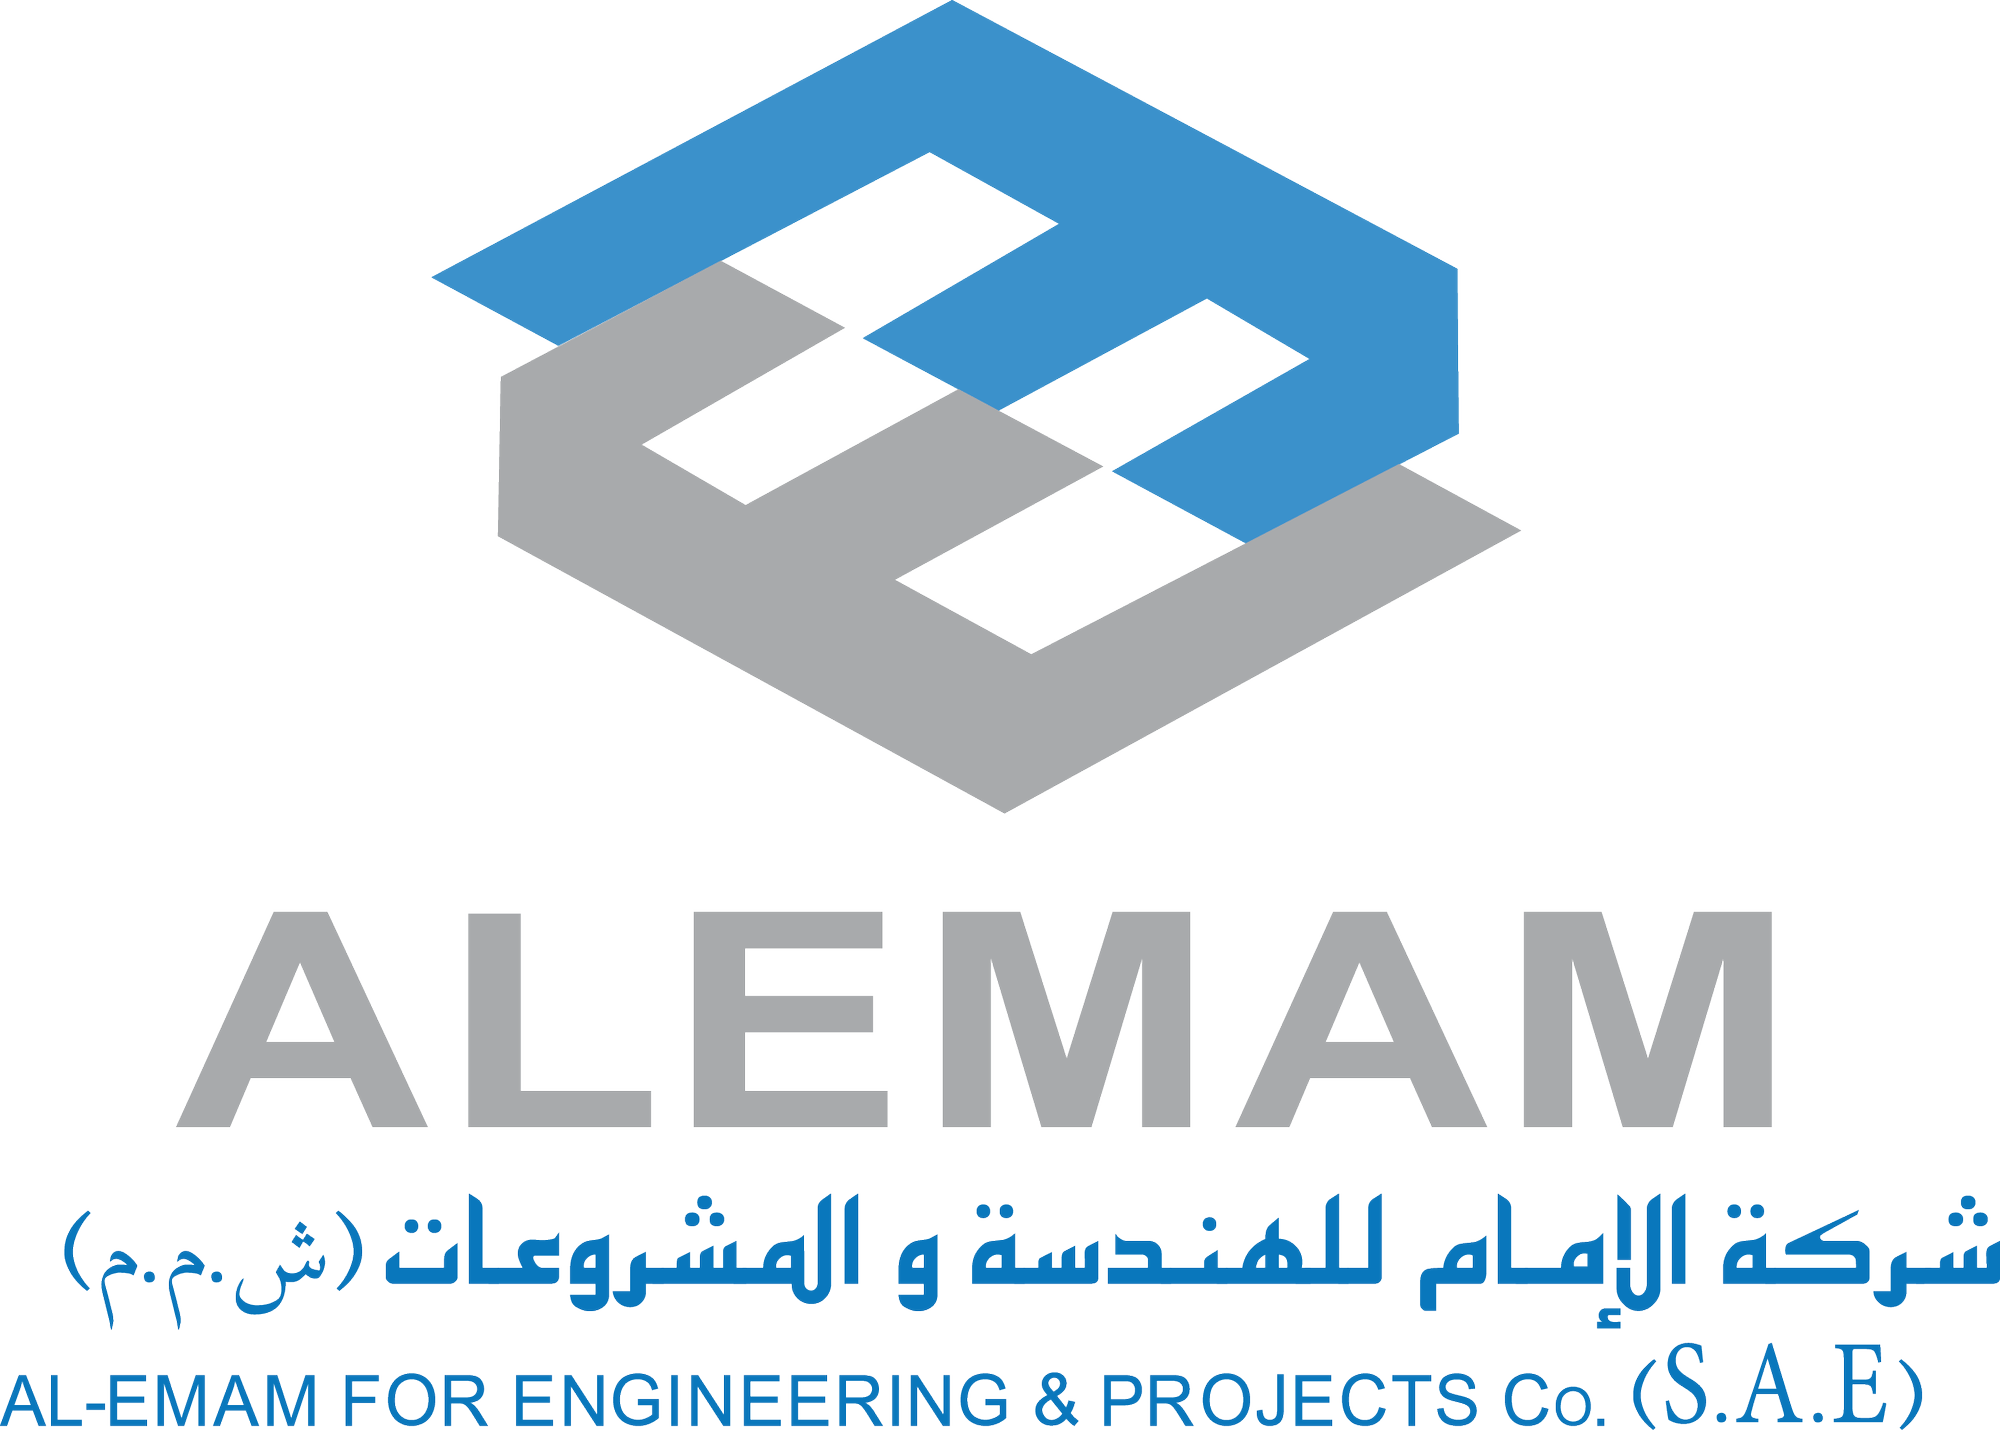 Al-Emam Group